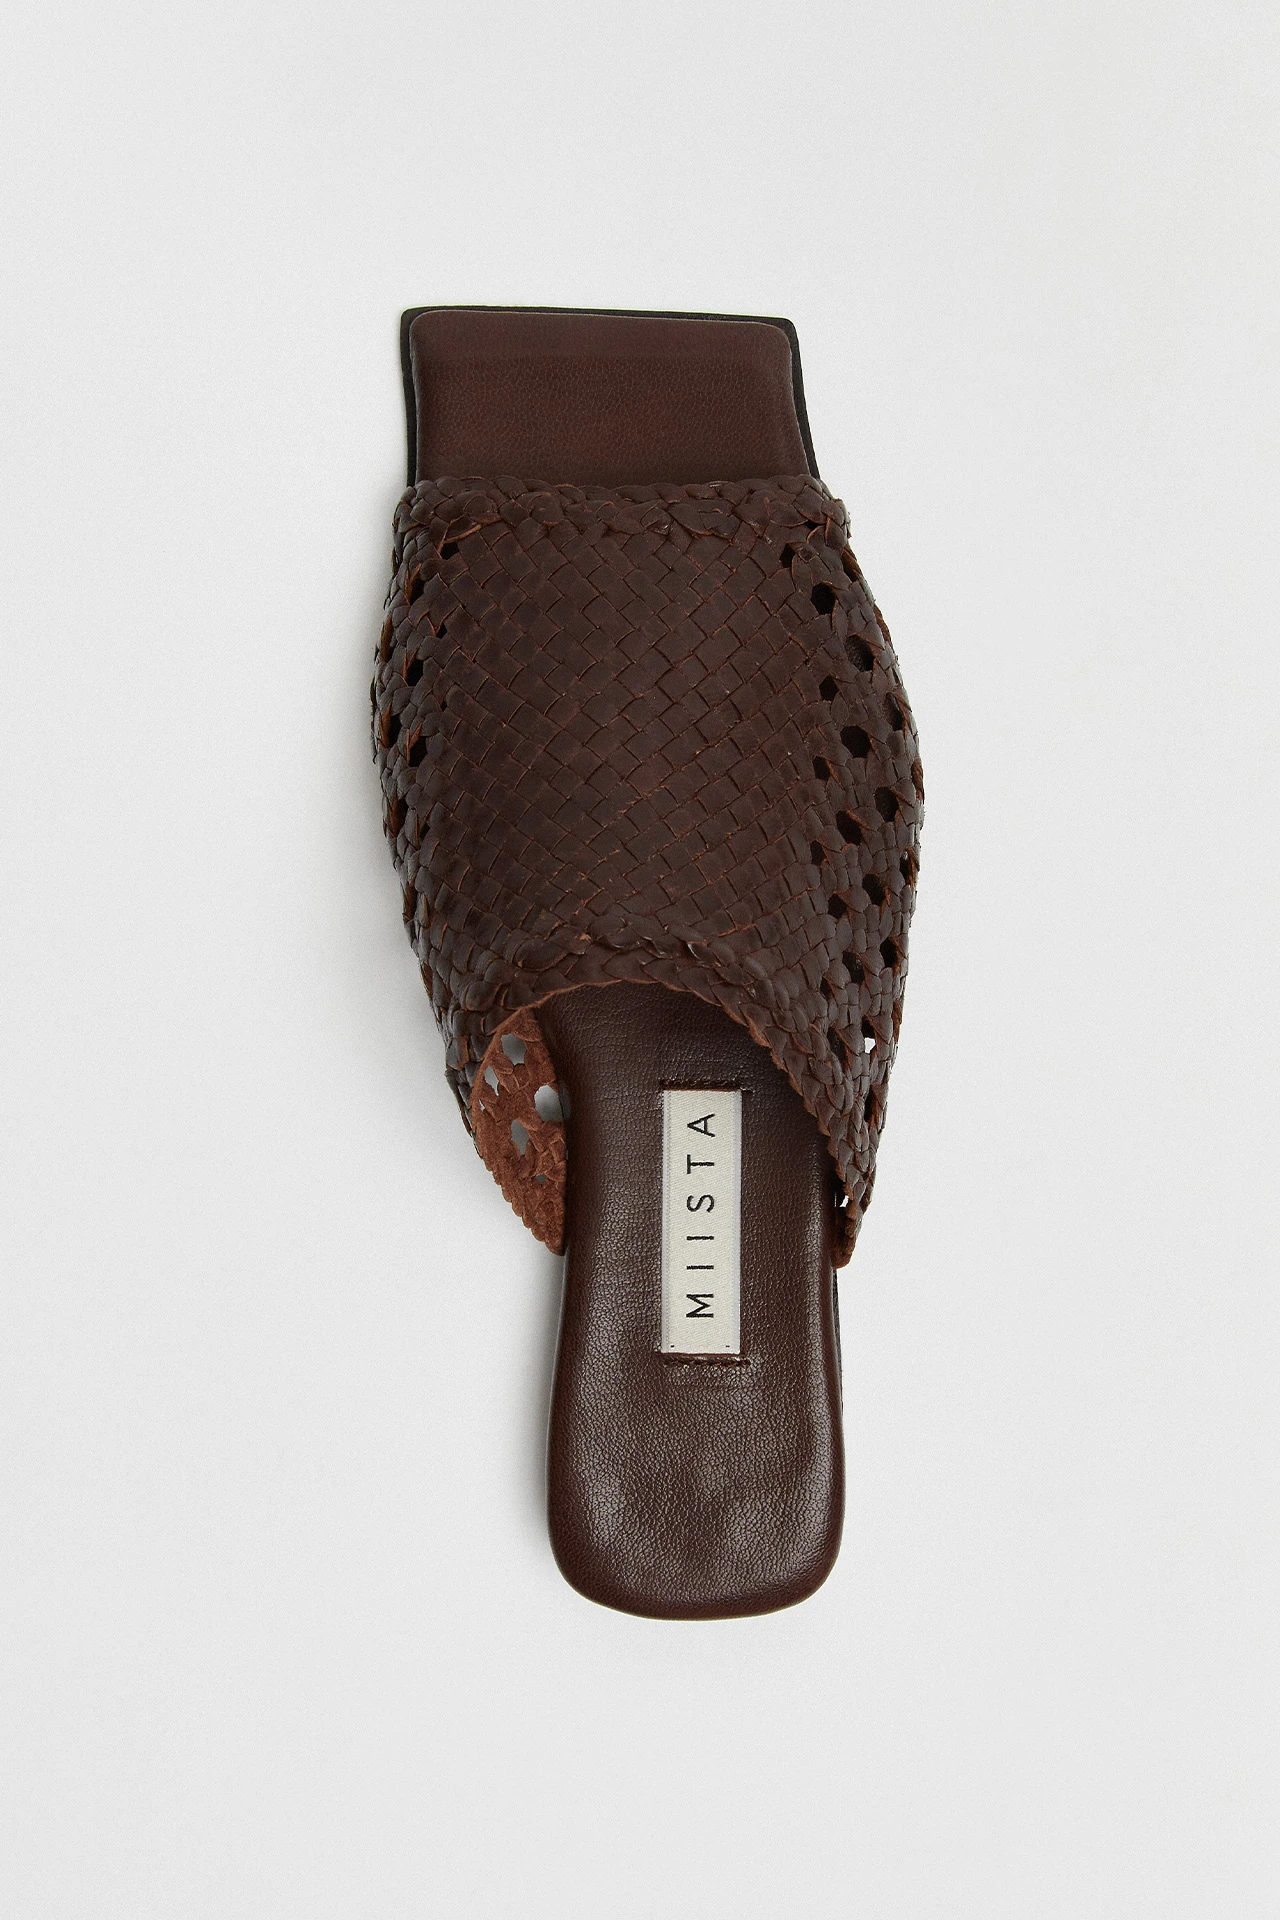 Miista-mayra-chocolate-brown-sandal-04